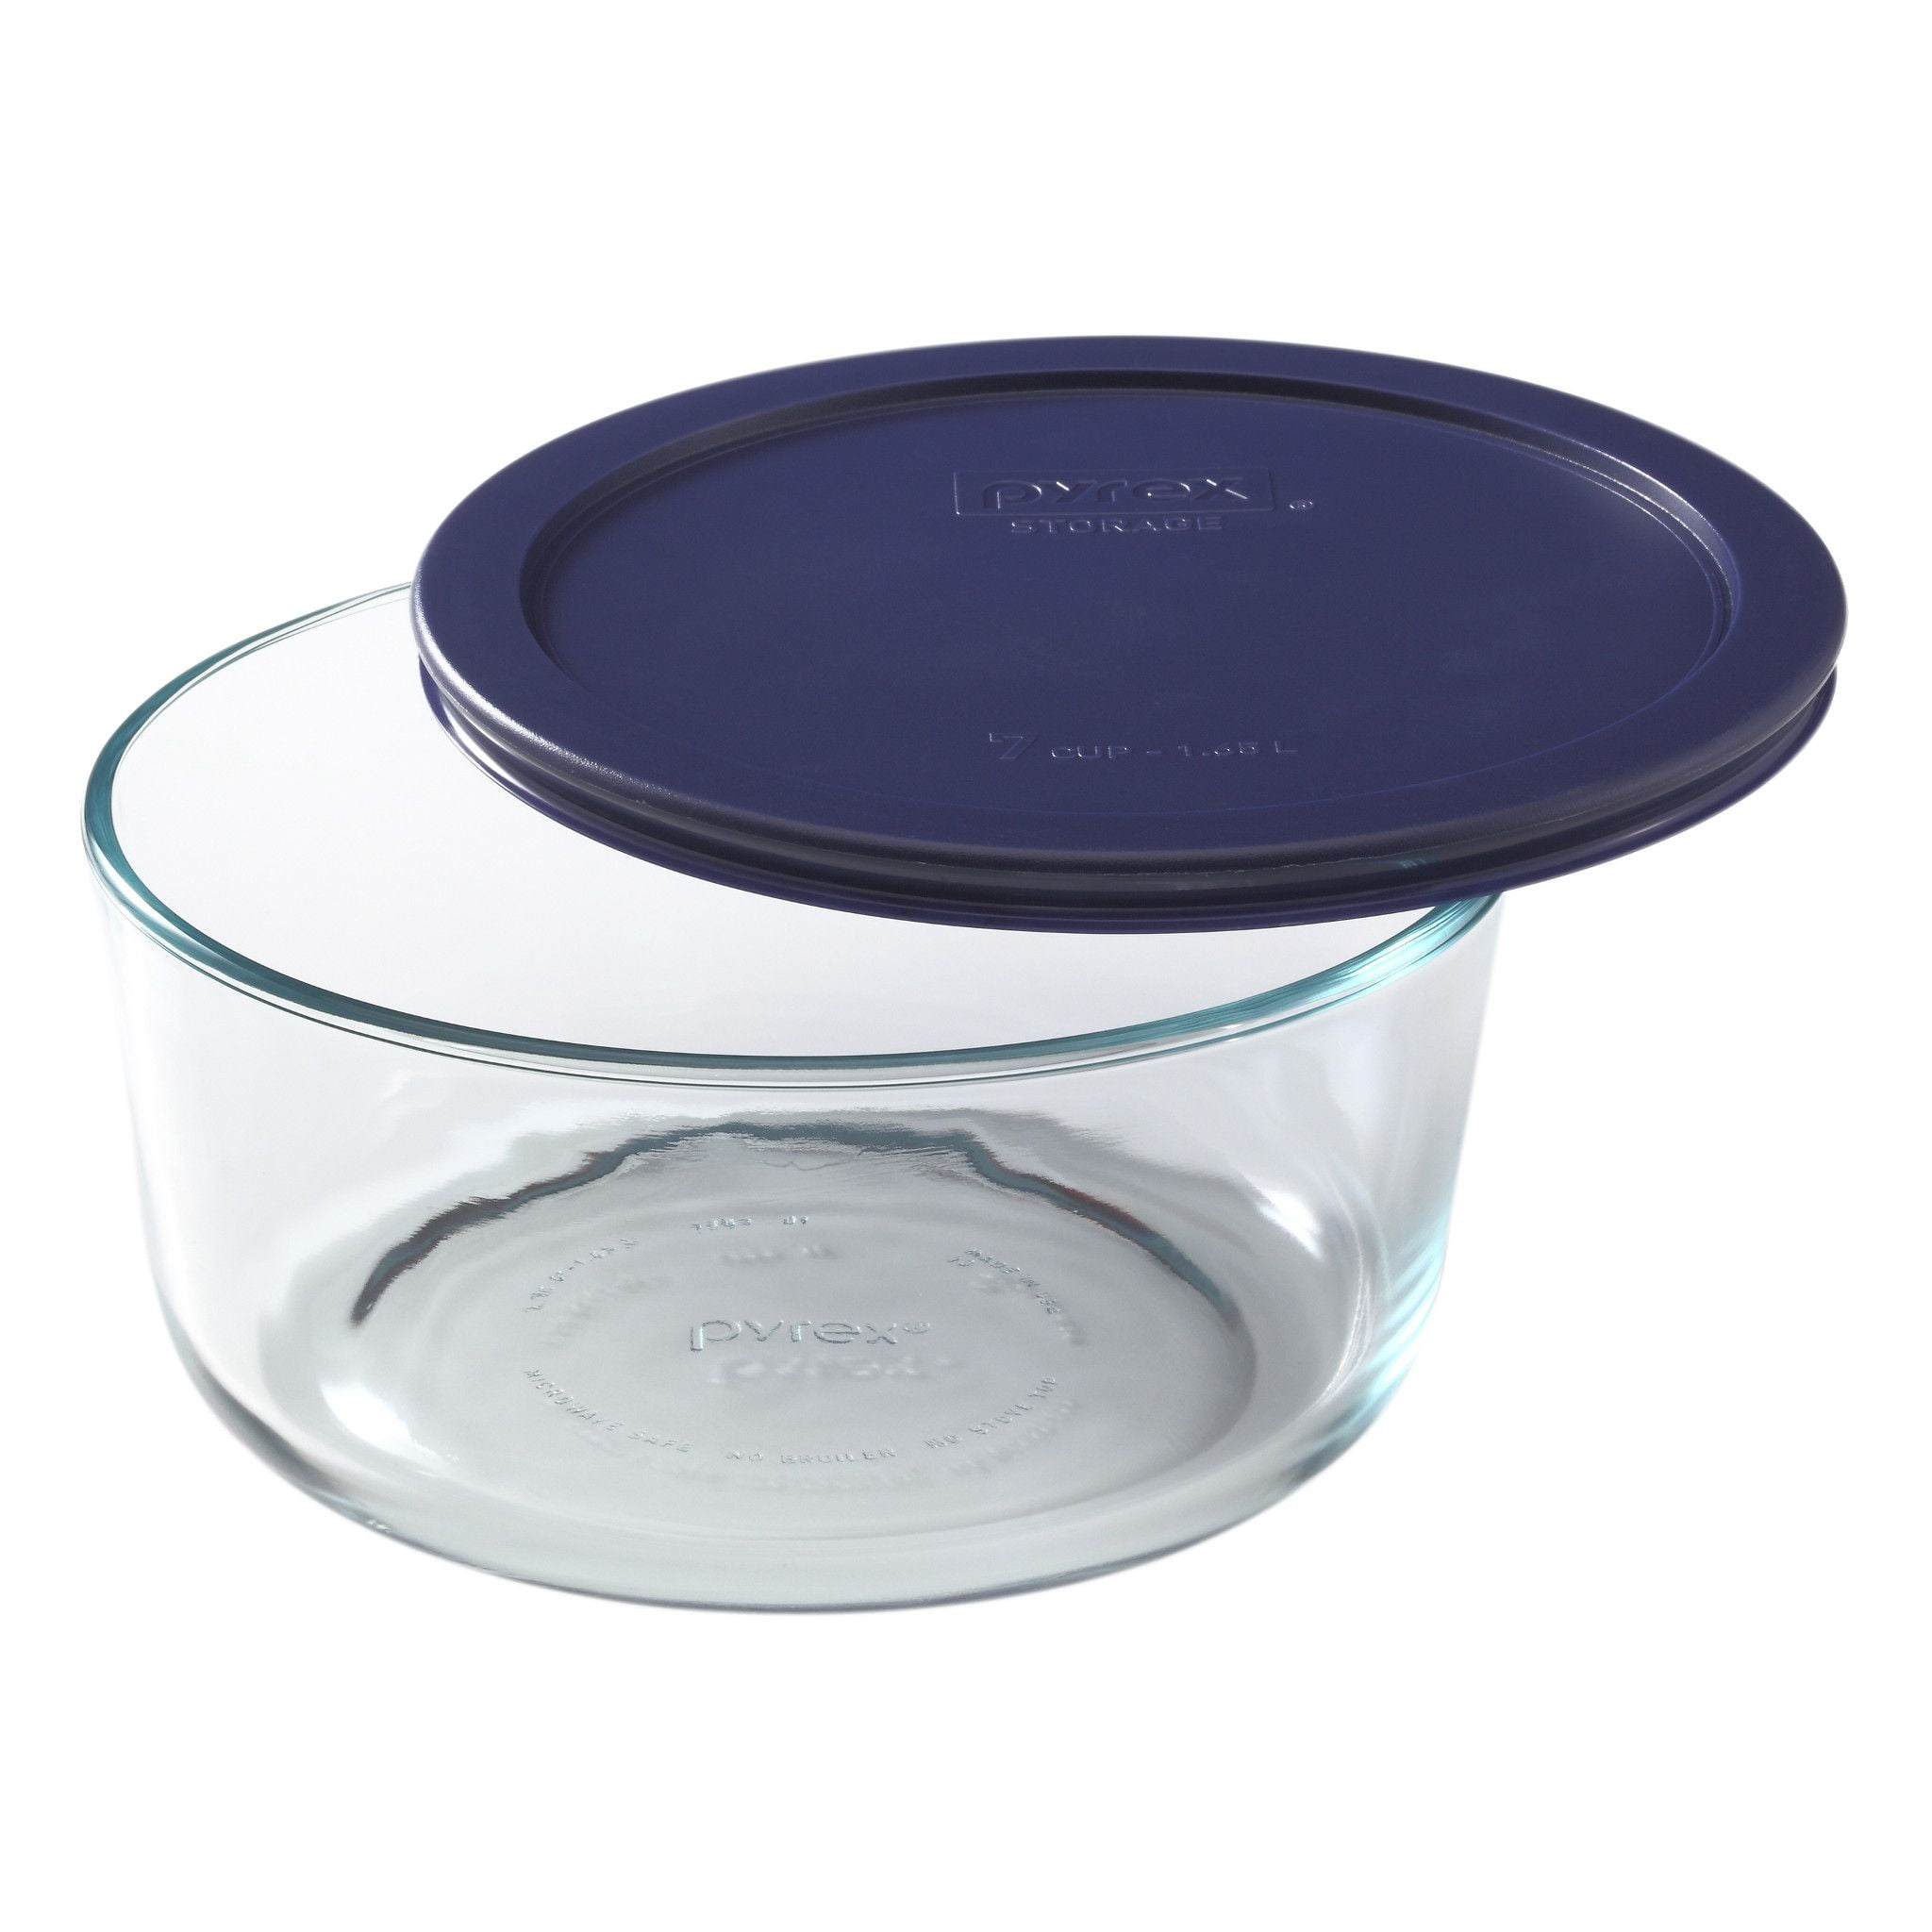 Pyrex Simply Store 11-Cup Rectangular Glass Food Storage Dish 